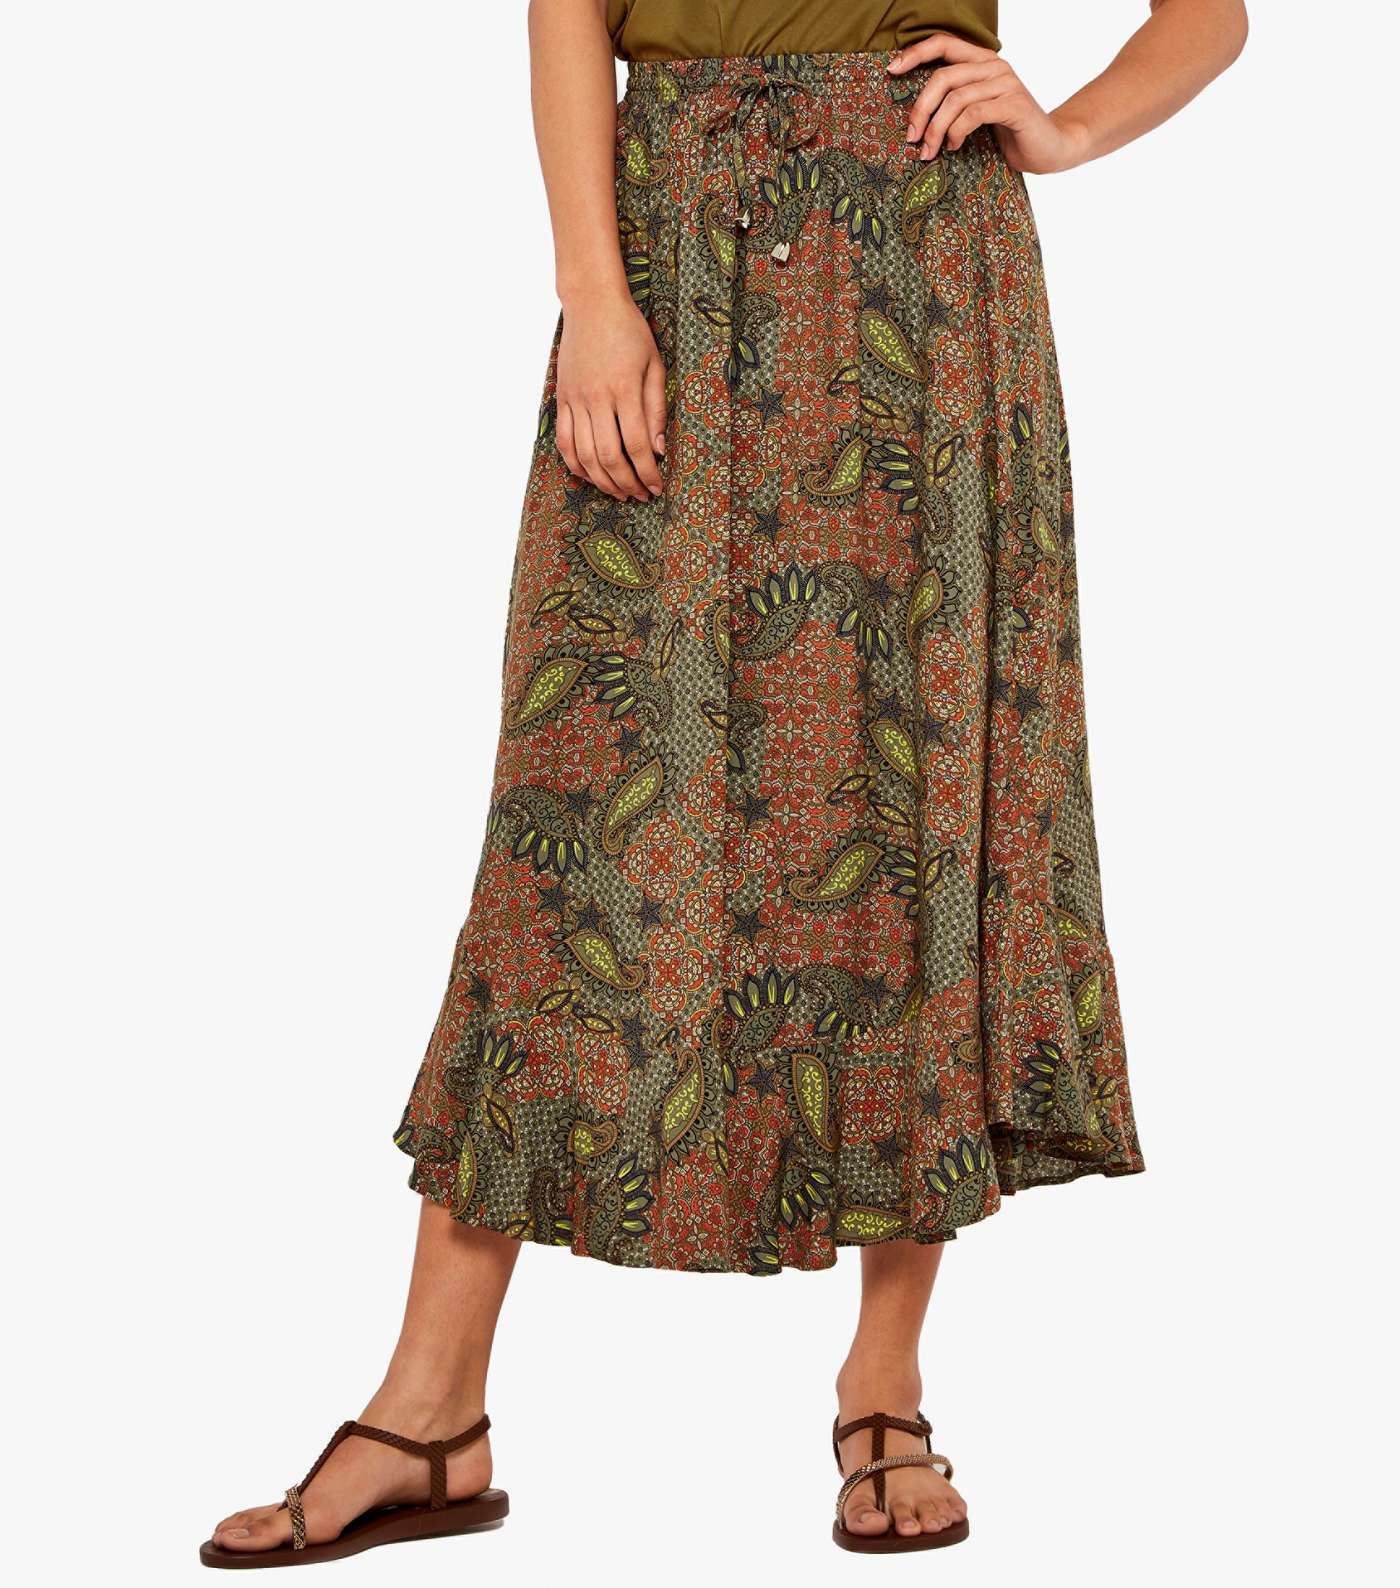 Apricot Khaki Paisley High Waist Midi Skirt Image 2